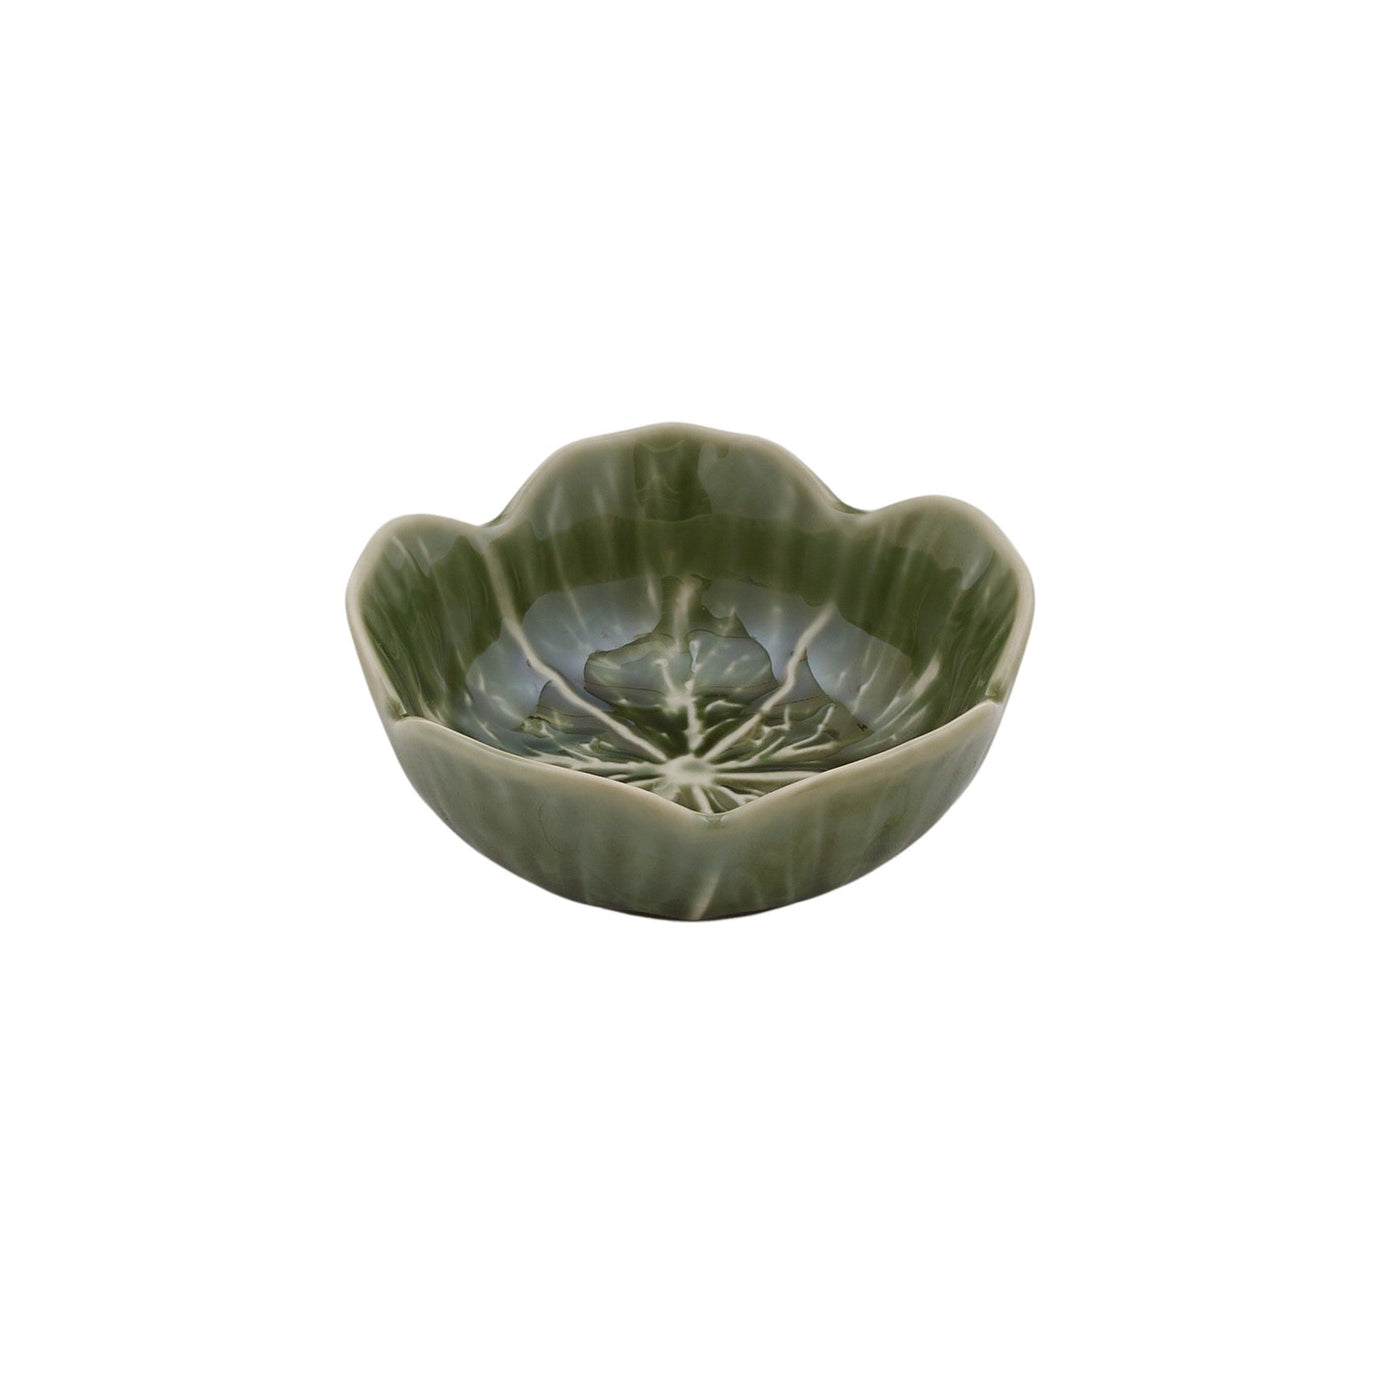 Cabbage Ceramic Bowl - Small